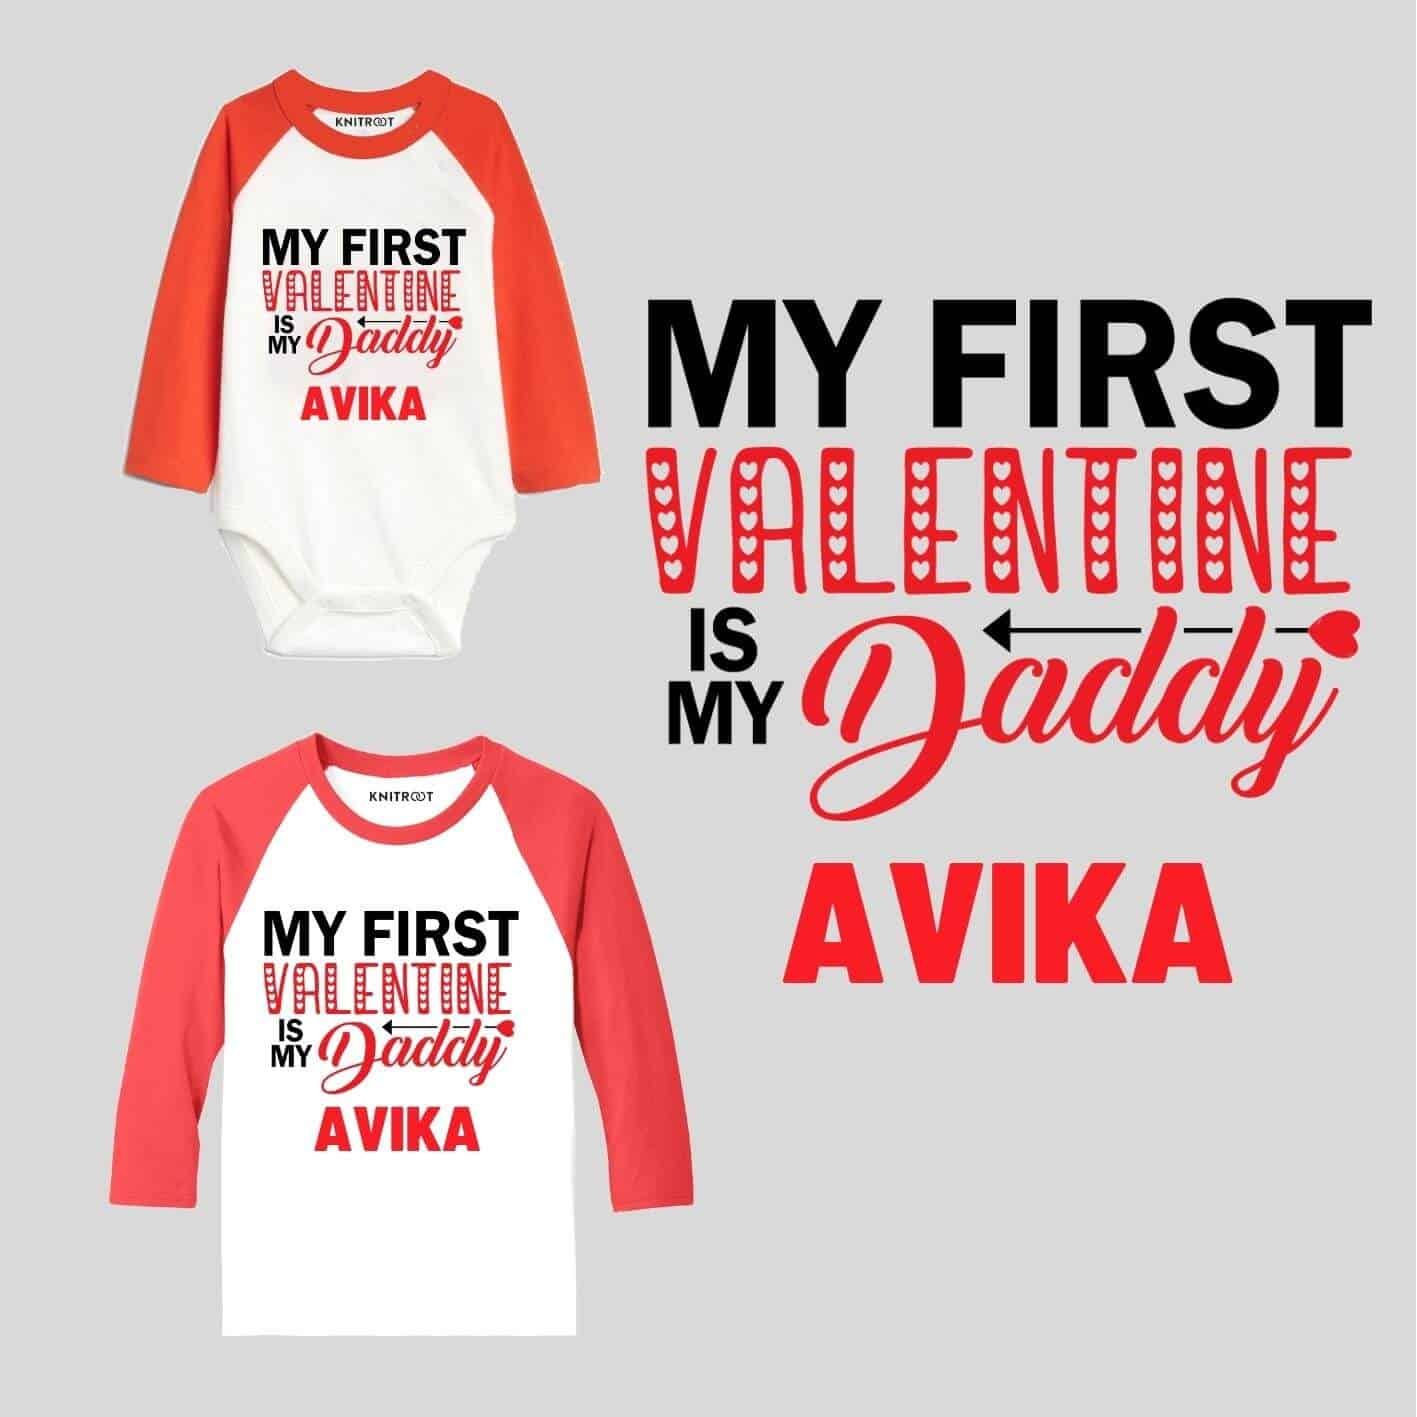 My first Valentine is my Daddy